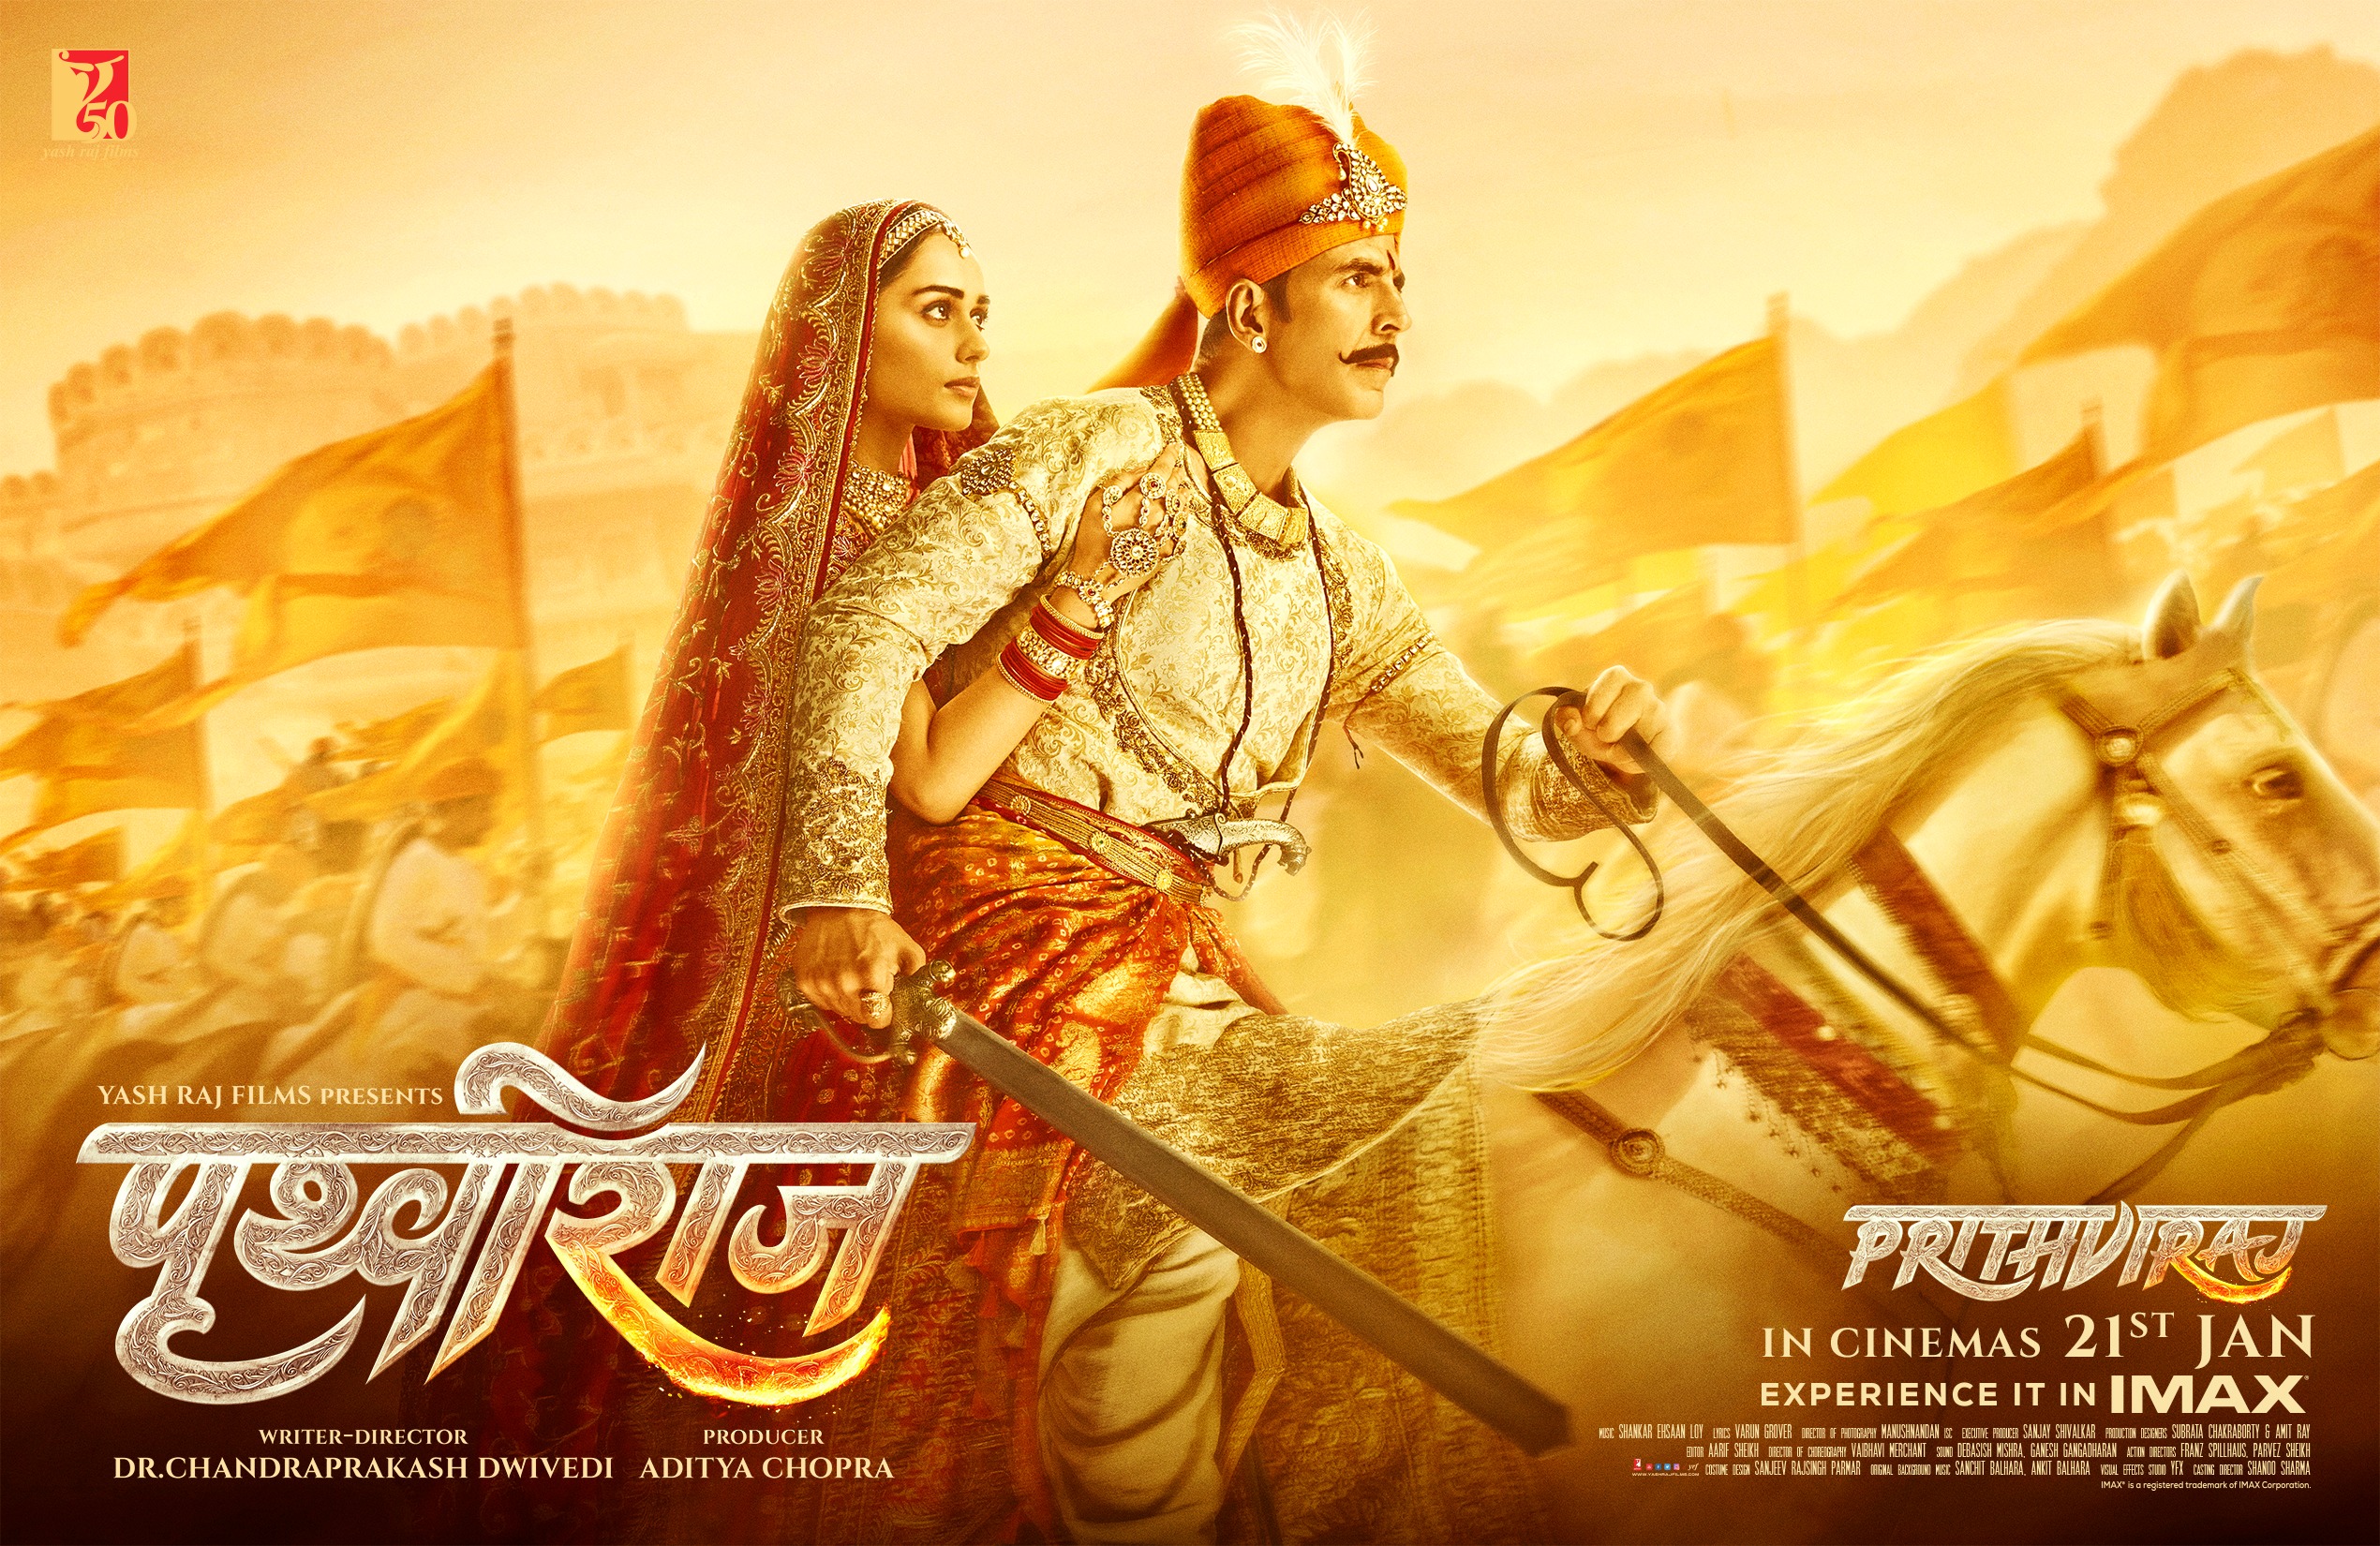 Prithviraj 2022 Hindi Movie Official Teaser 1080p HDRip Free Download